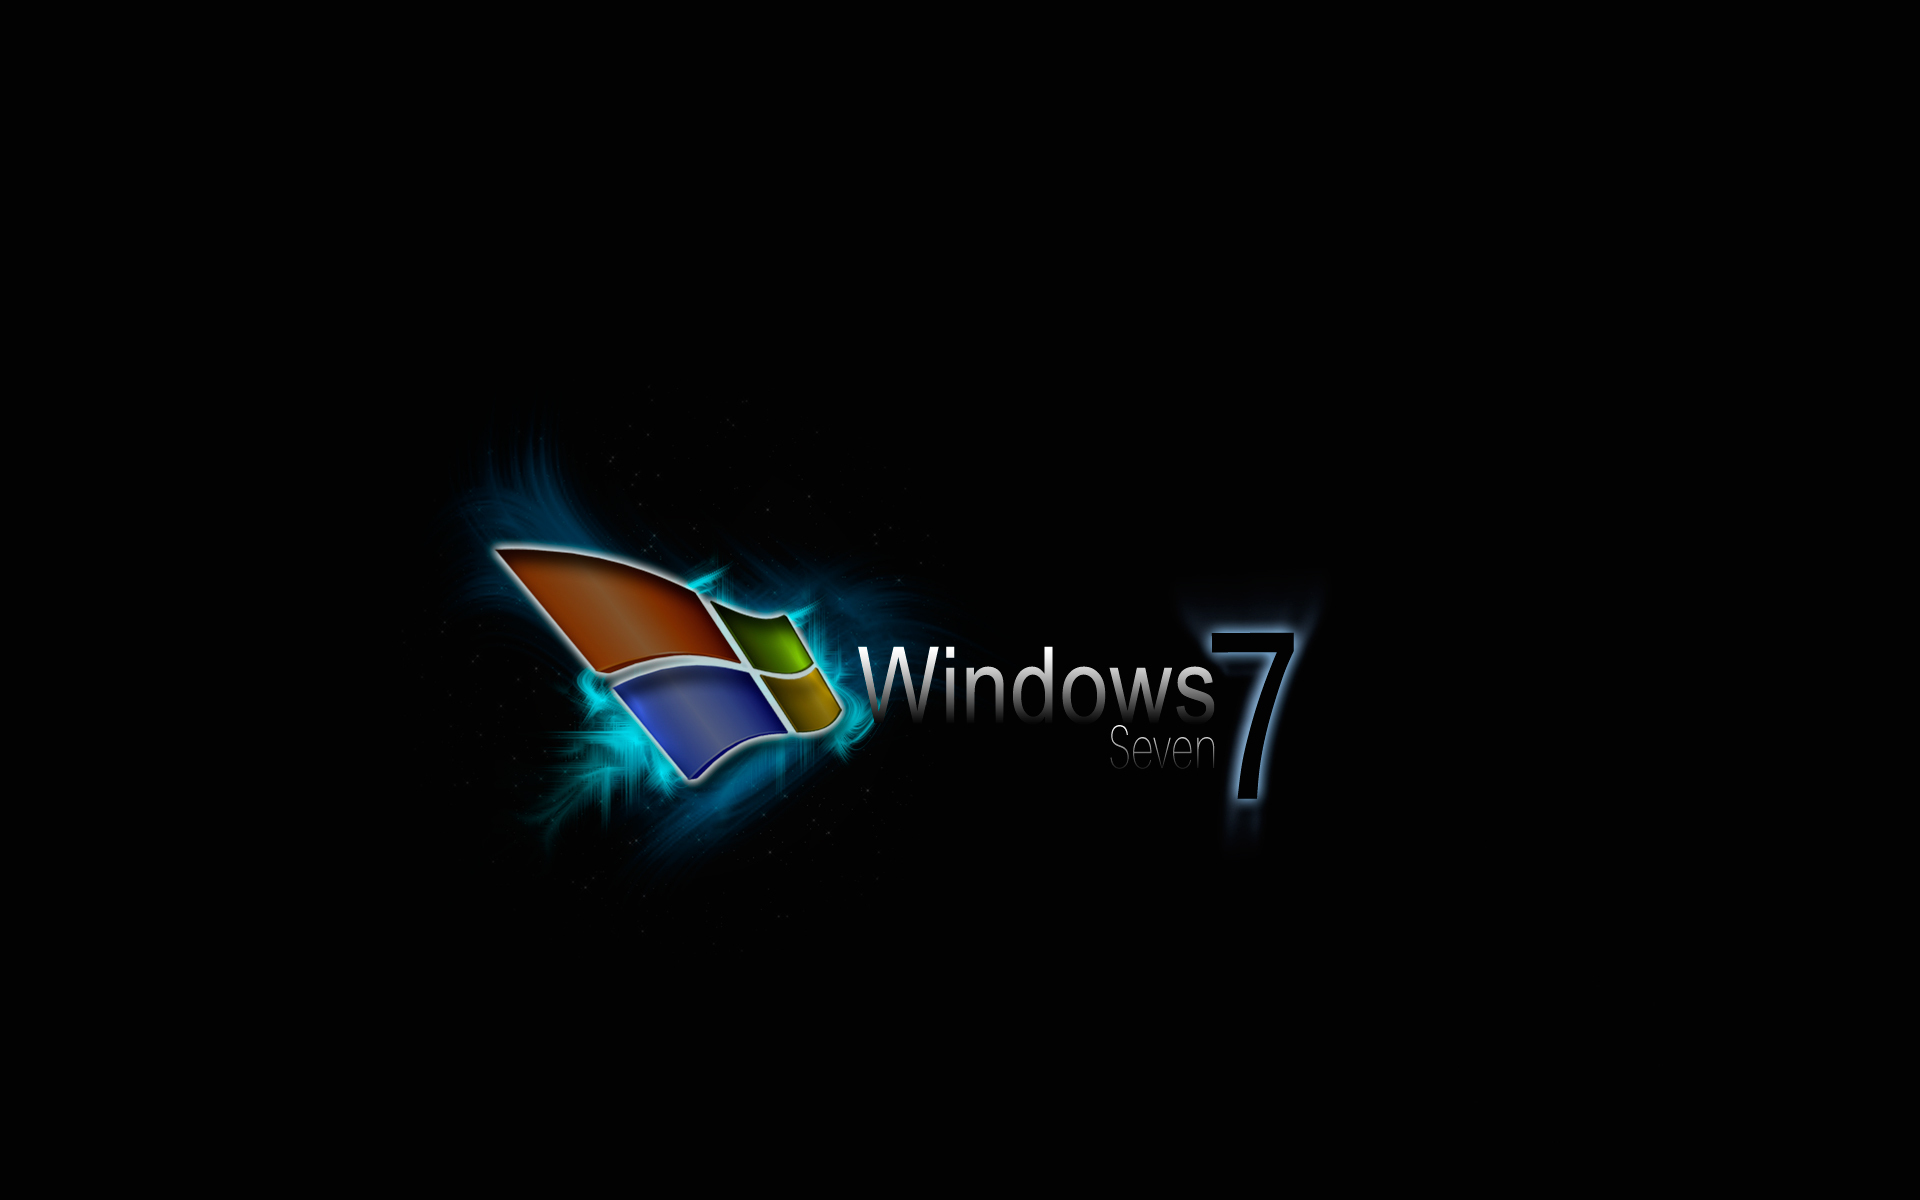 Windows - the colour Black Wallpaper (22255394) - Fanpop